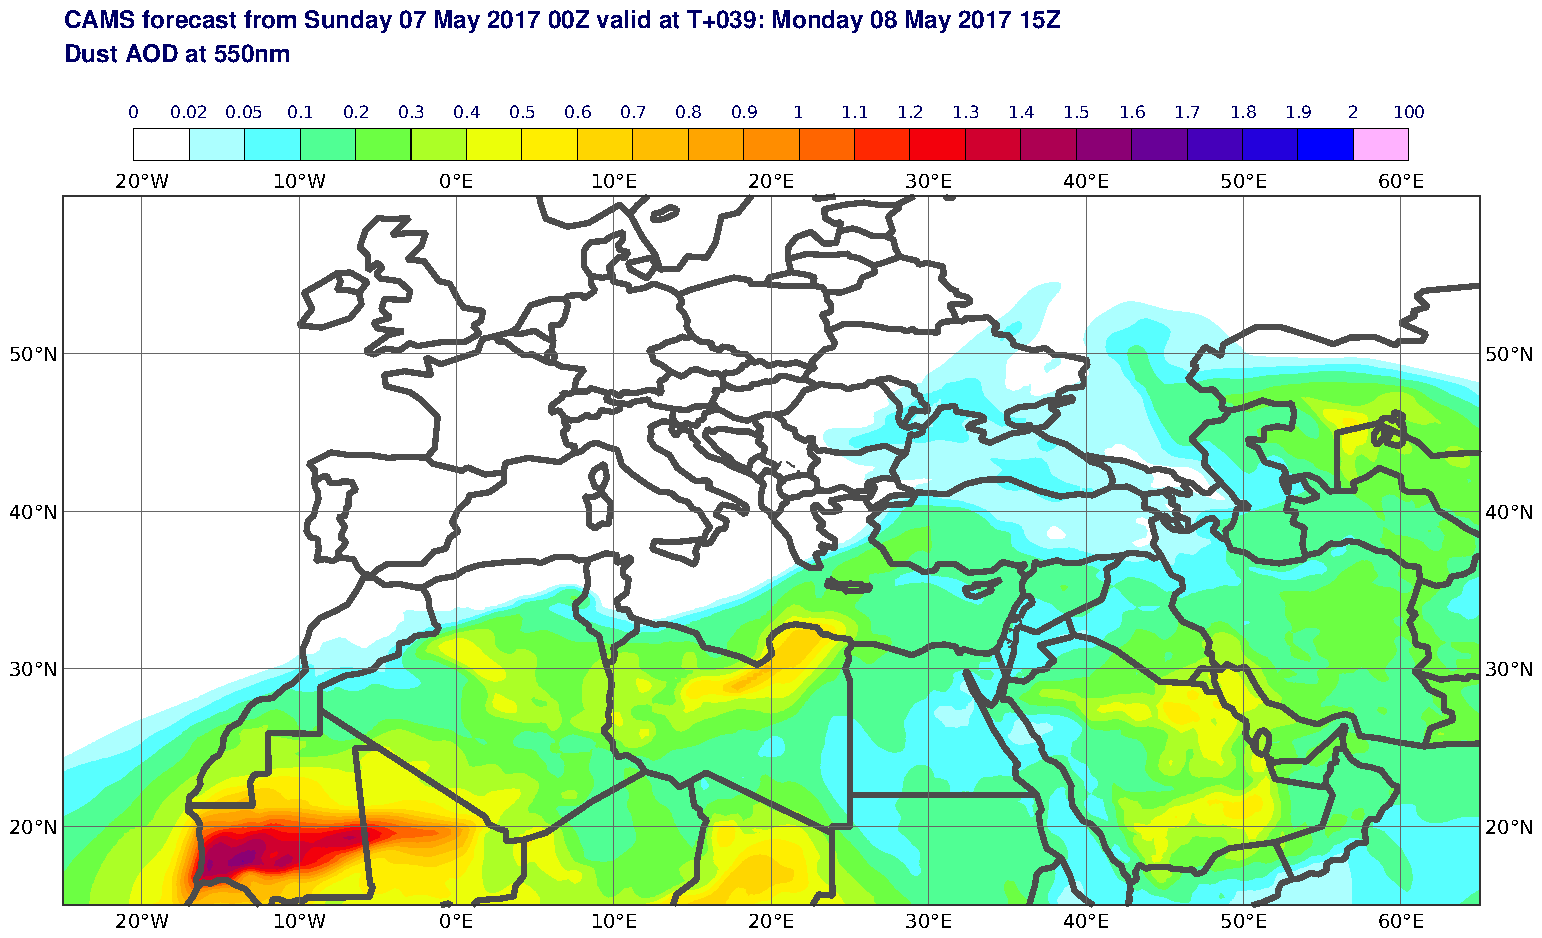 Dust AOD at 550nm valid at T39 - 2017-05-08 15:00